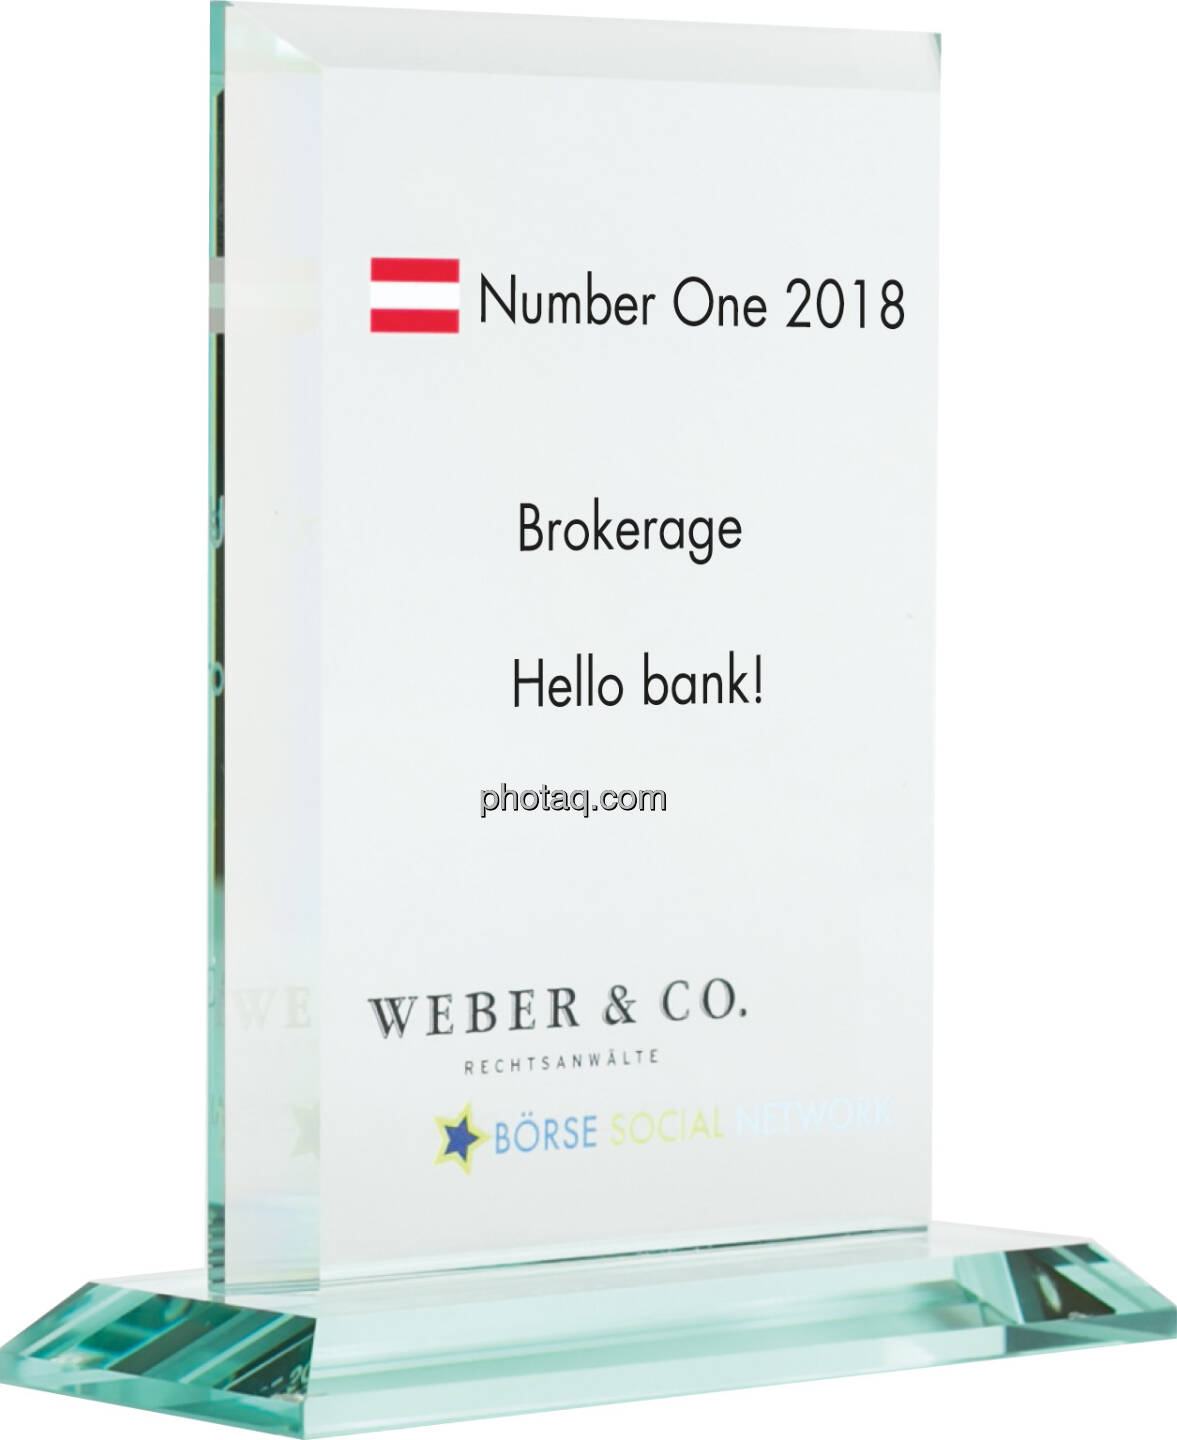 Number One Awards 2018 - Brokerage Hello bank!